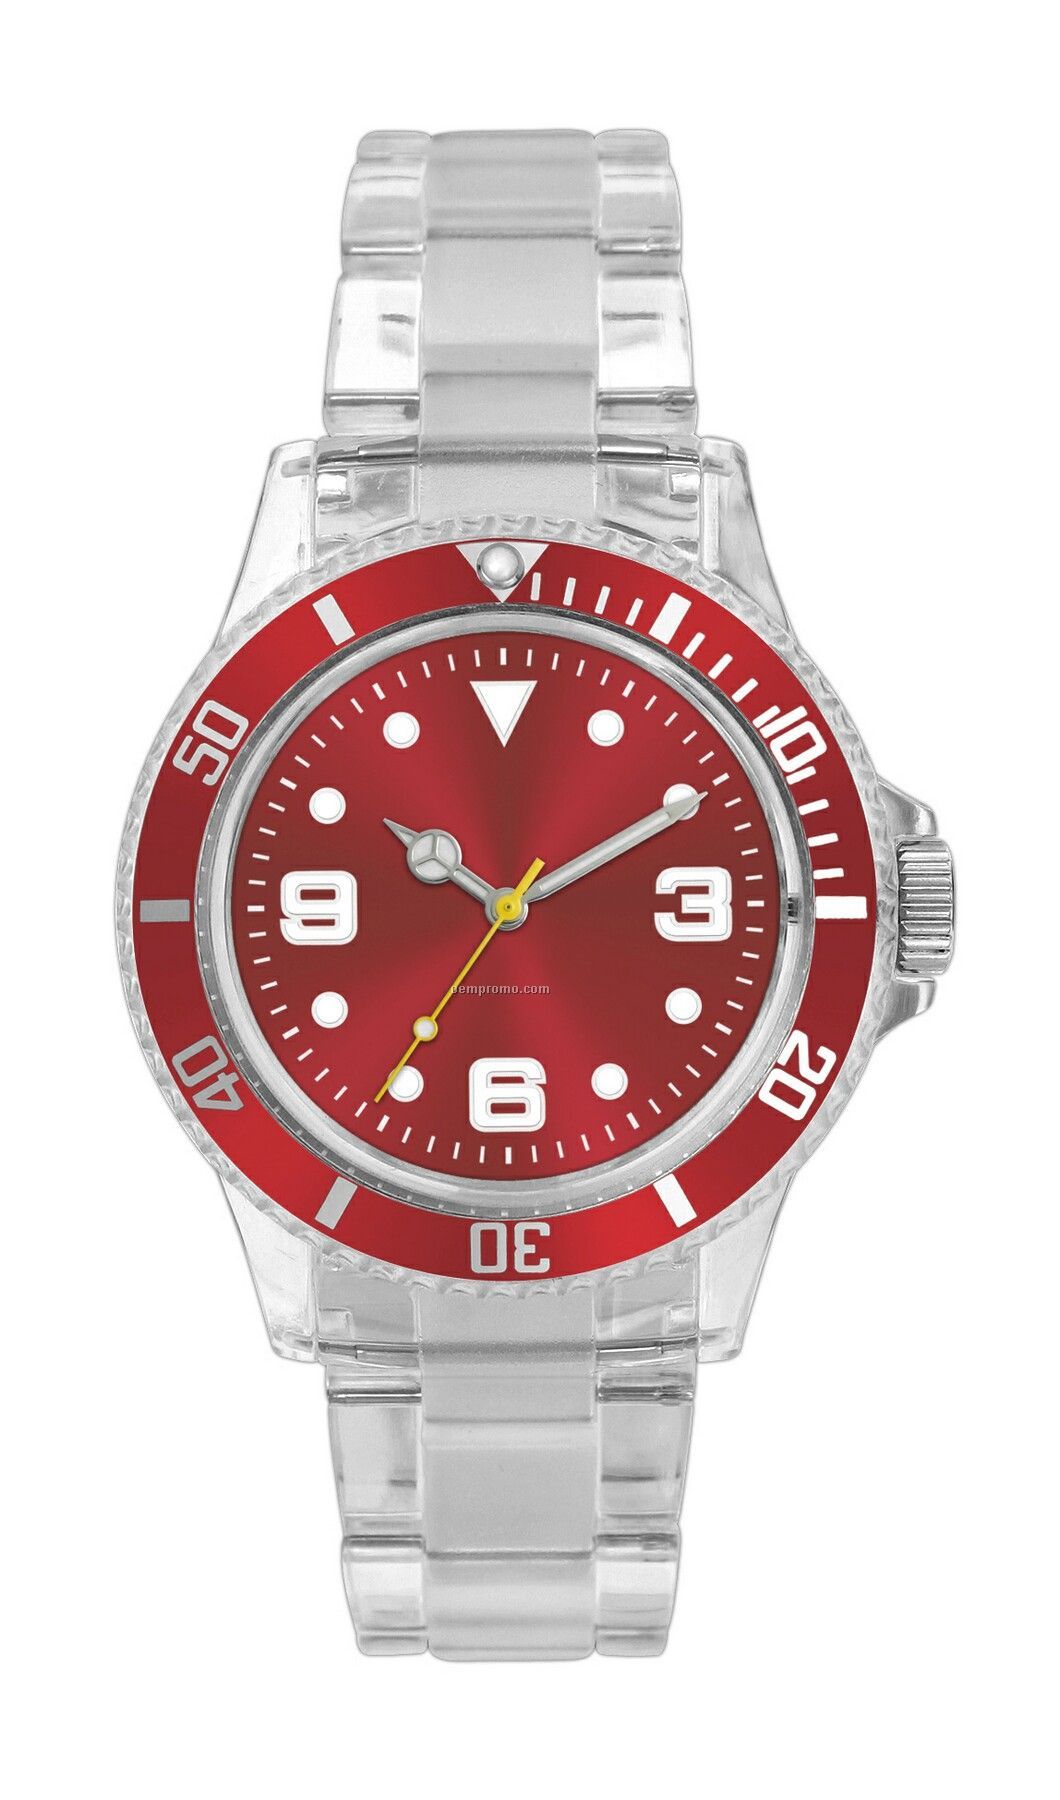 Pedre Polar Watch W/ Red Bezel